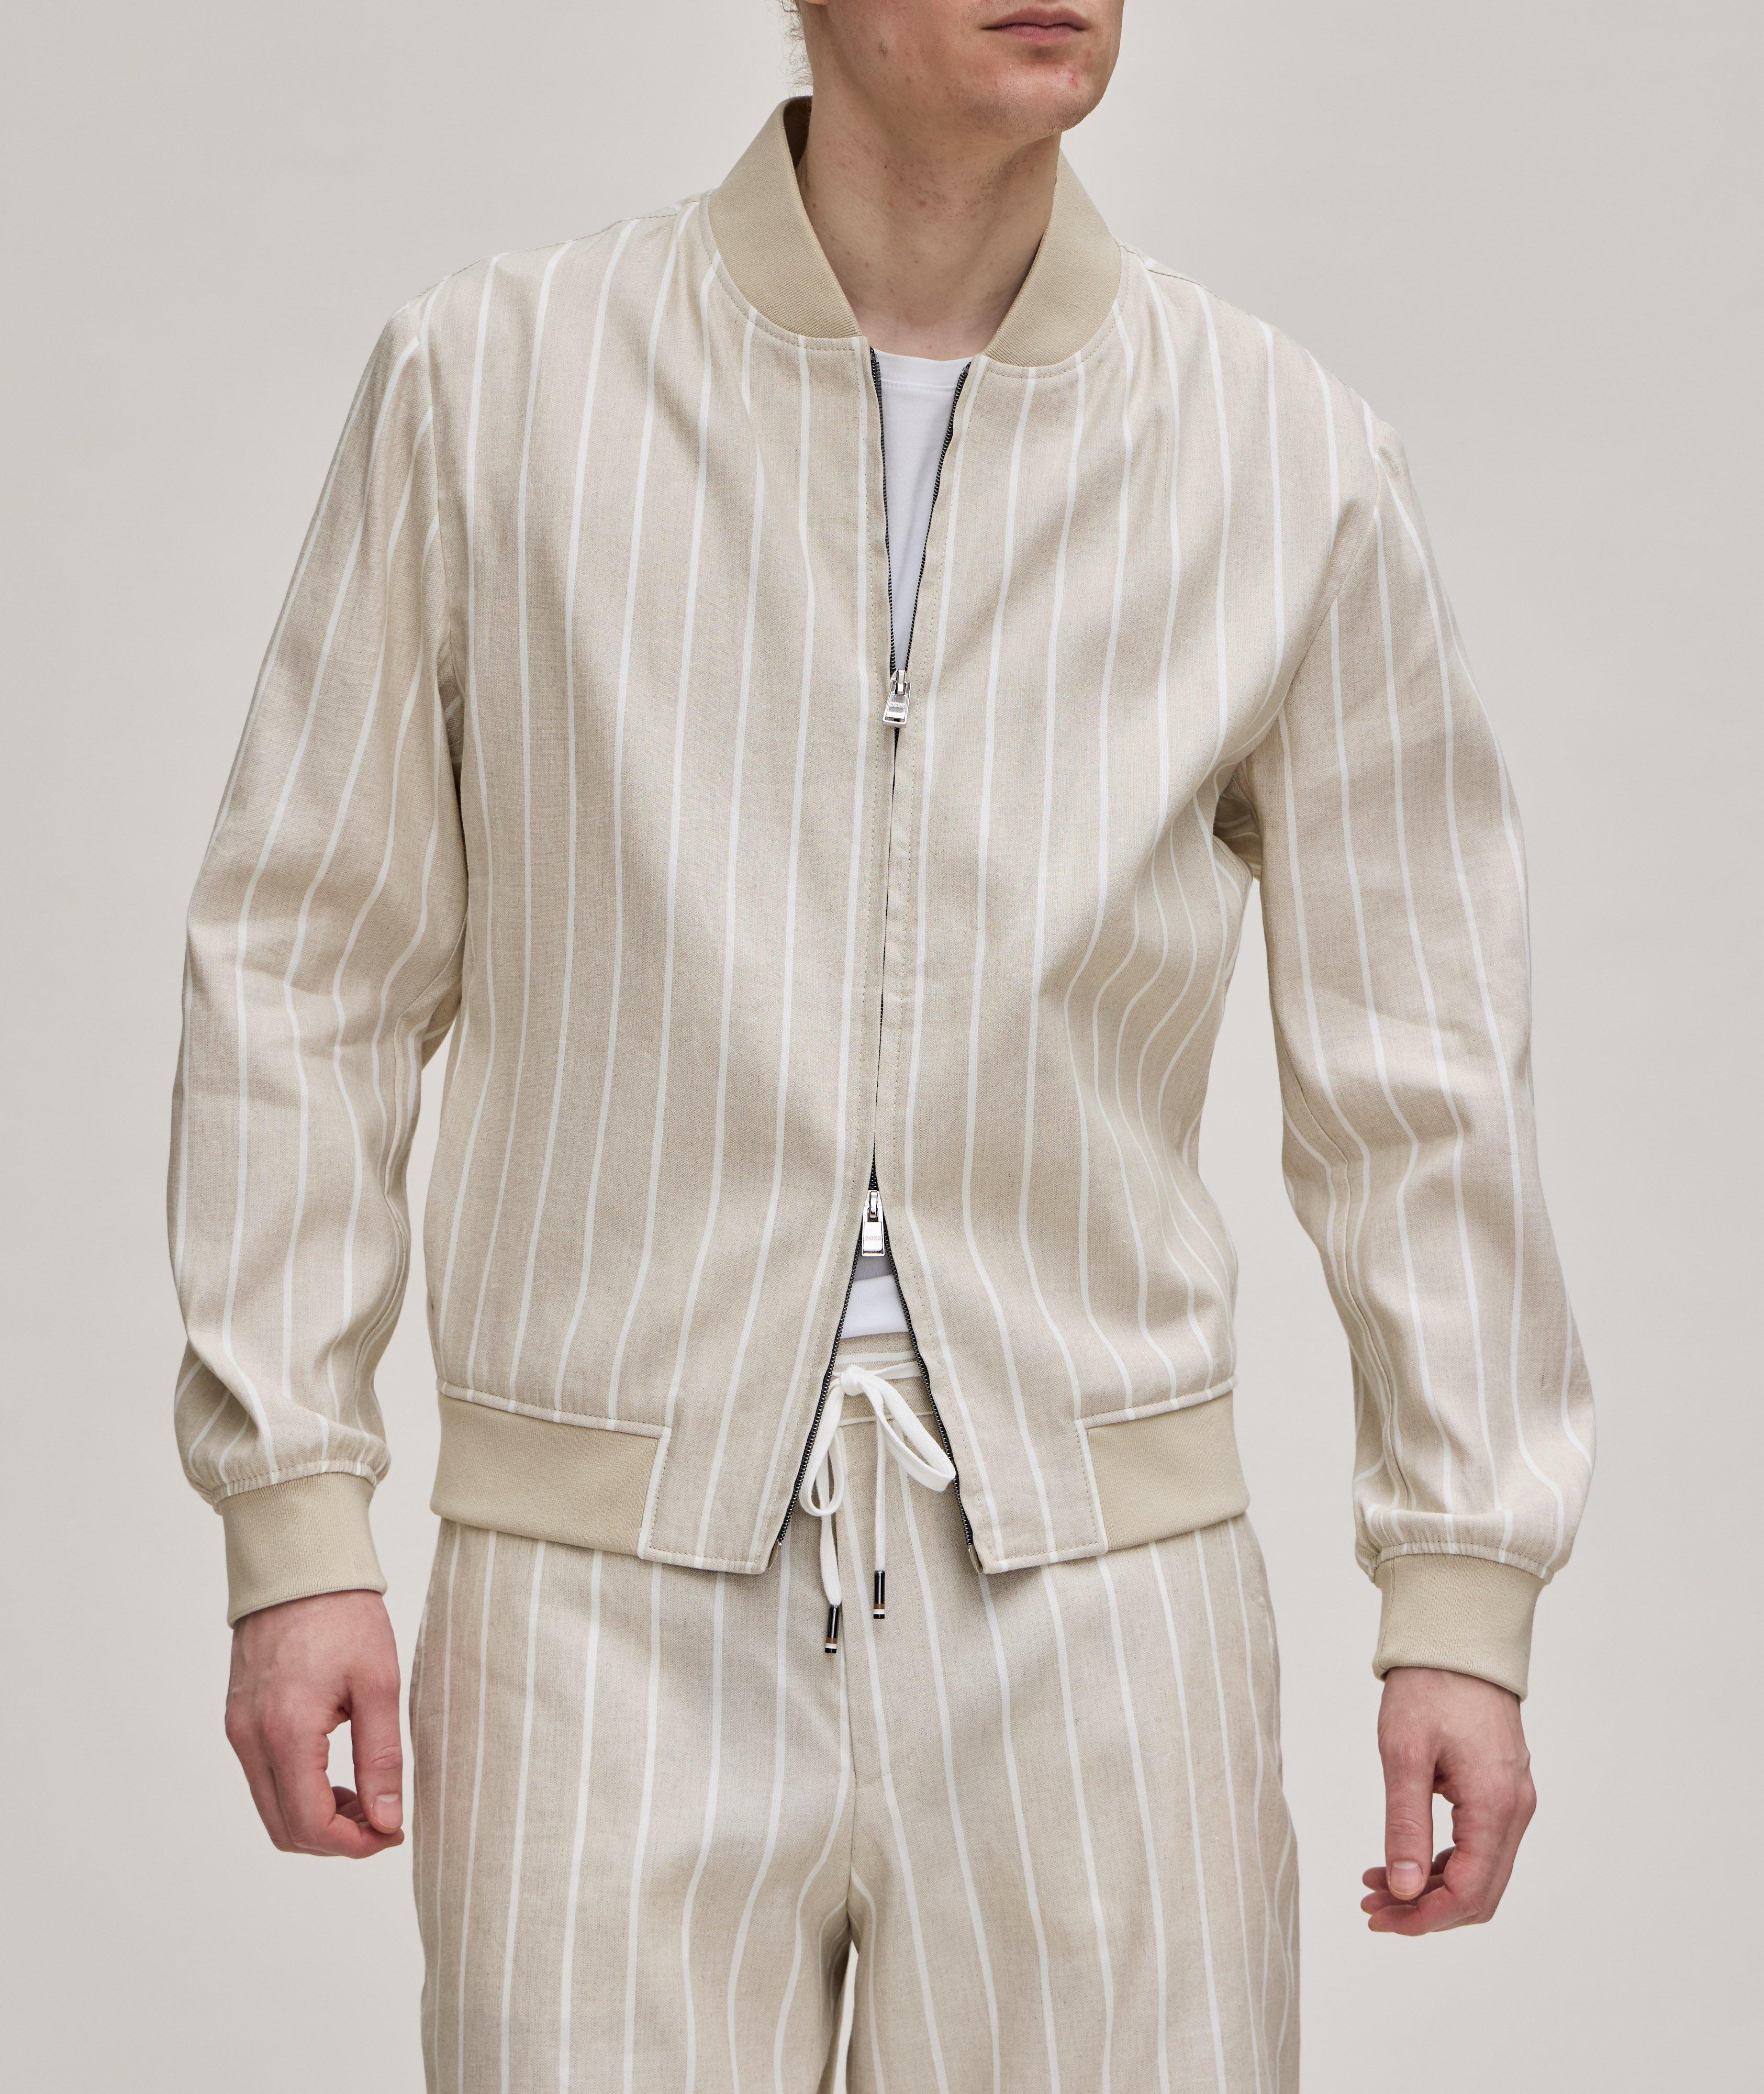 Hanry Striped Italian Linen-Cotton Jacket image 1